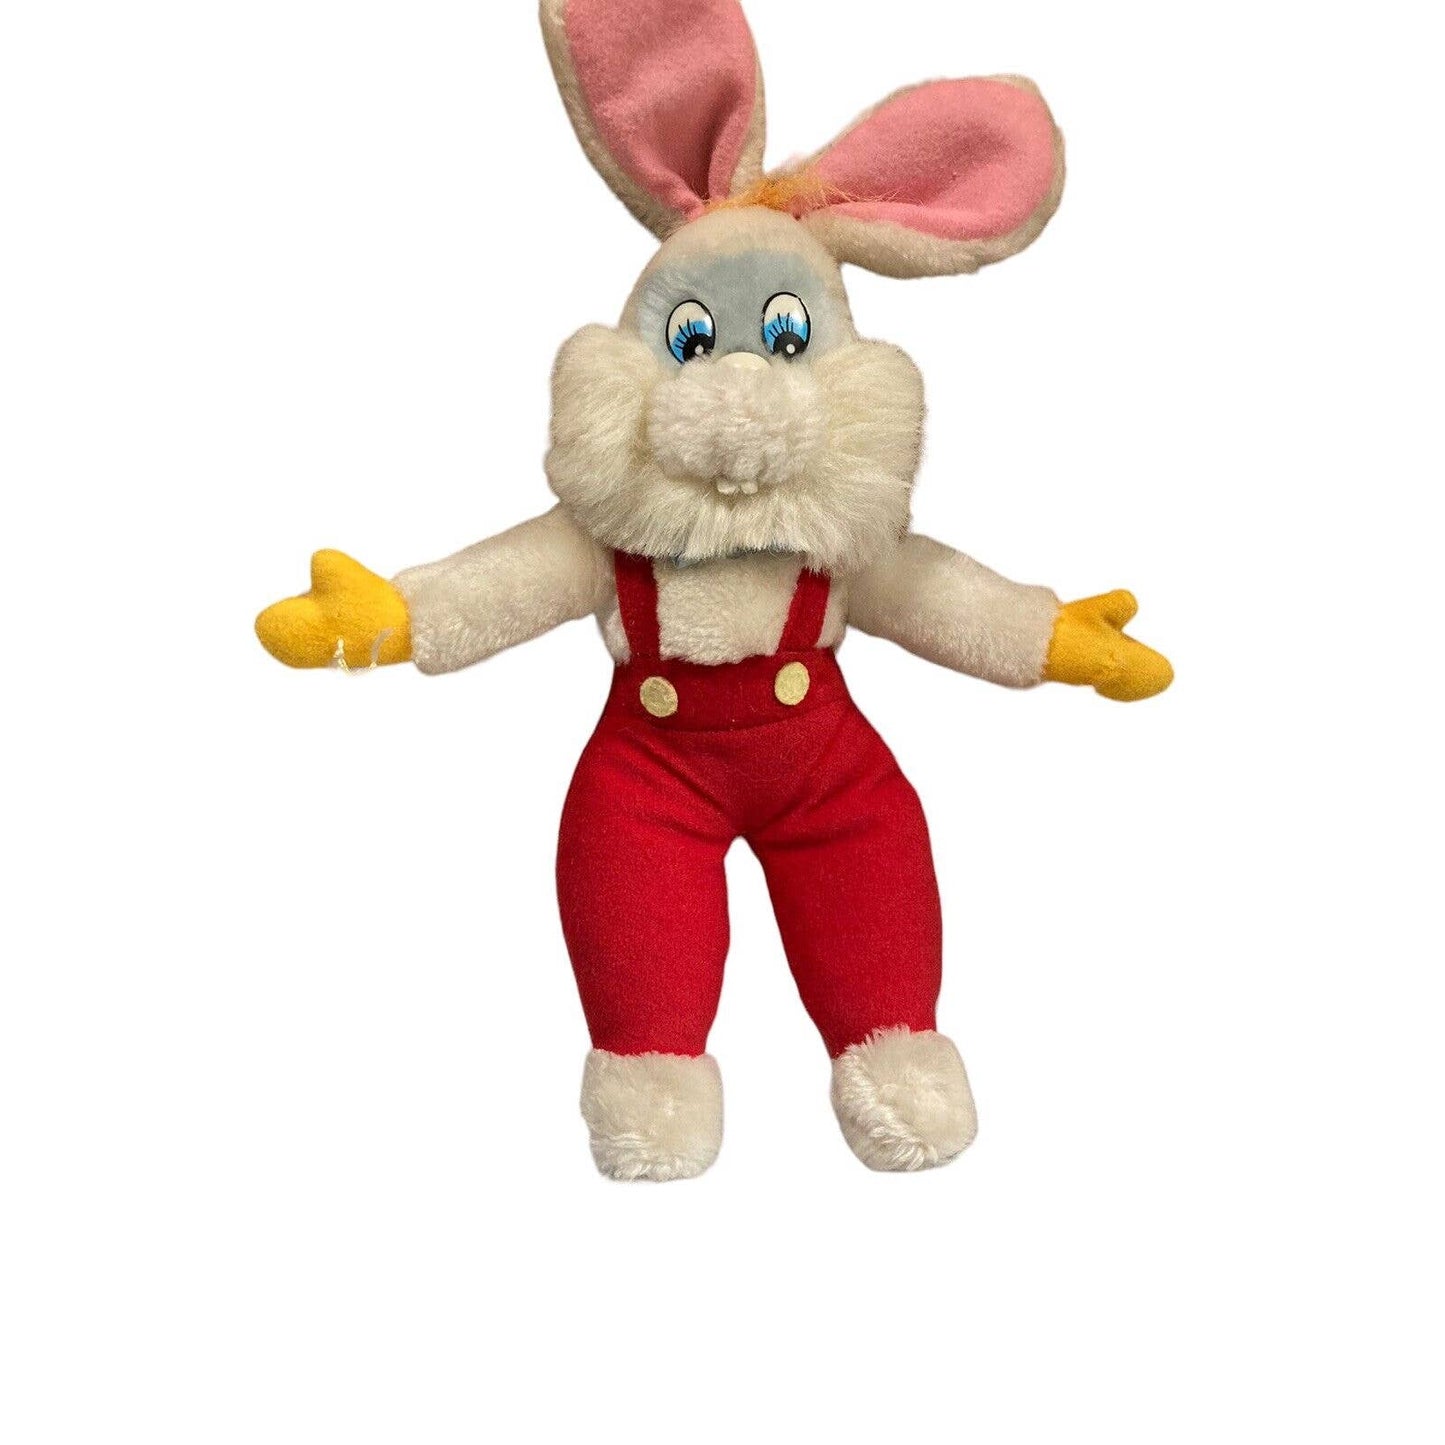 Disney Who Framed Roger Rabbit Vintage Stuffed Animal Plush Toy